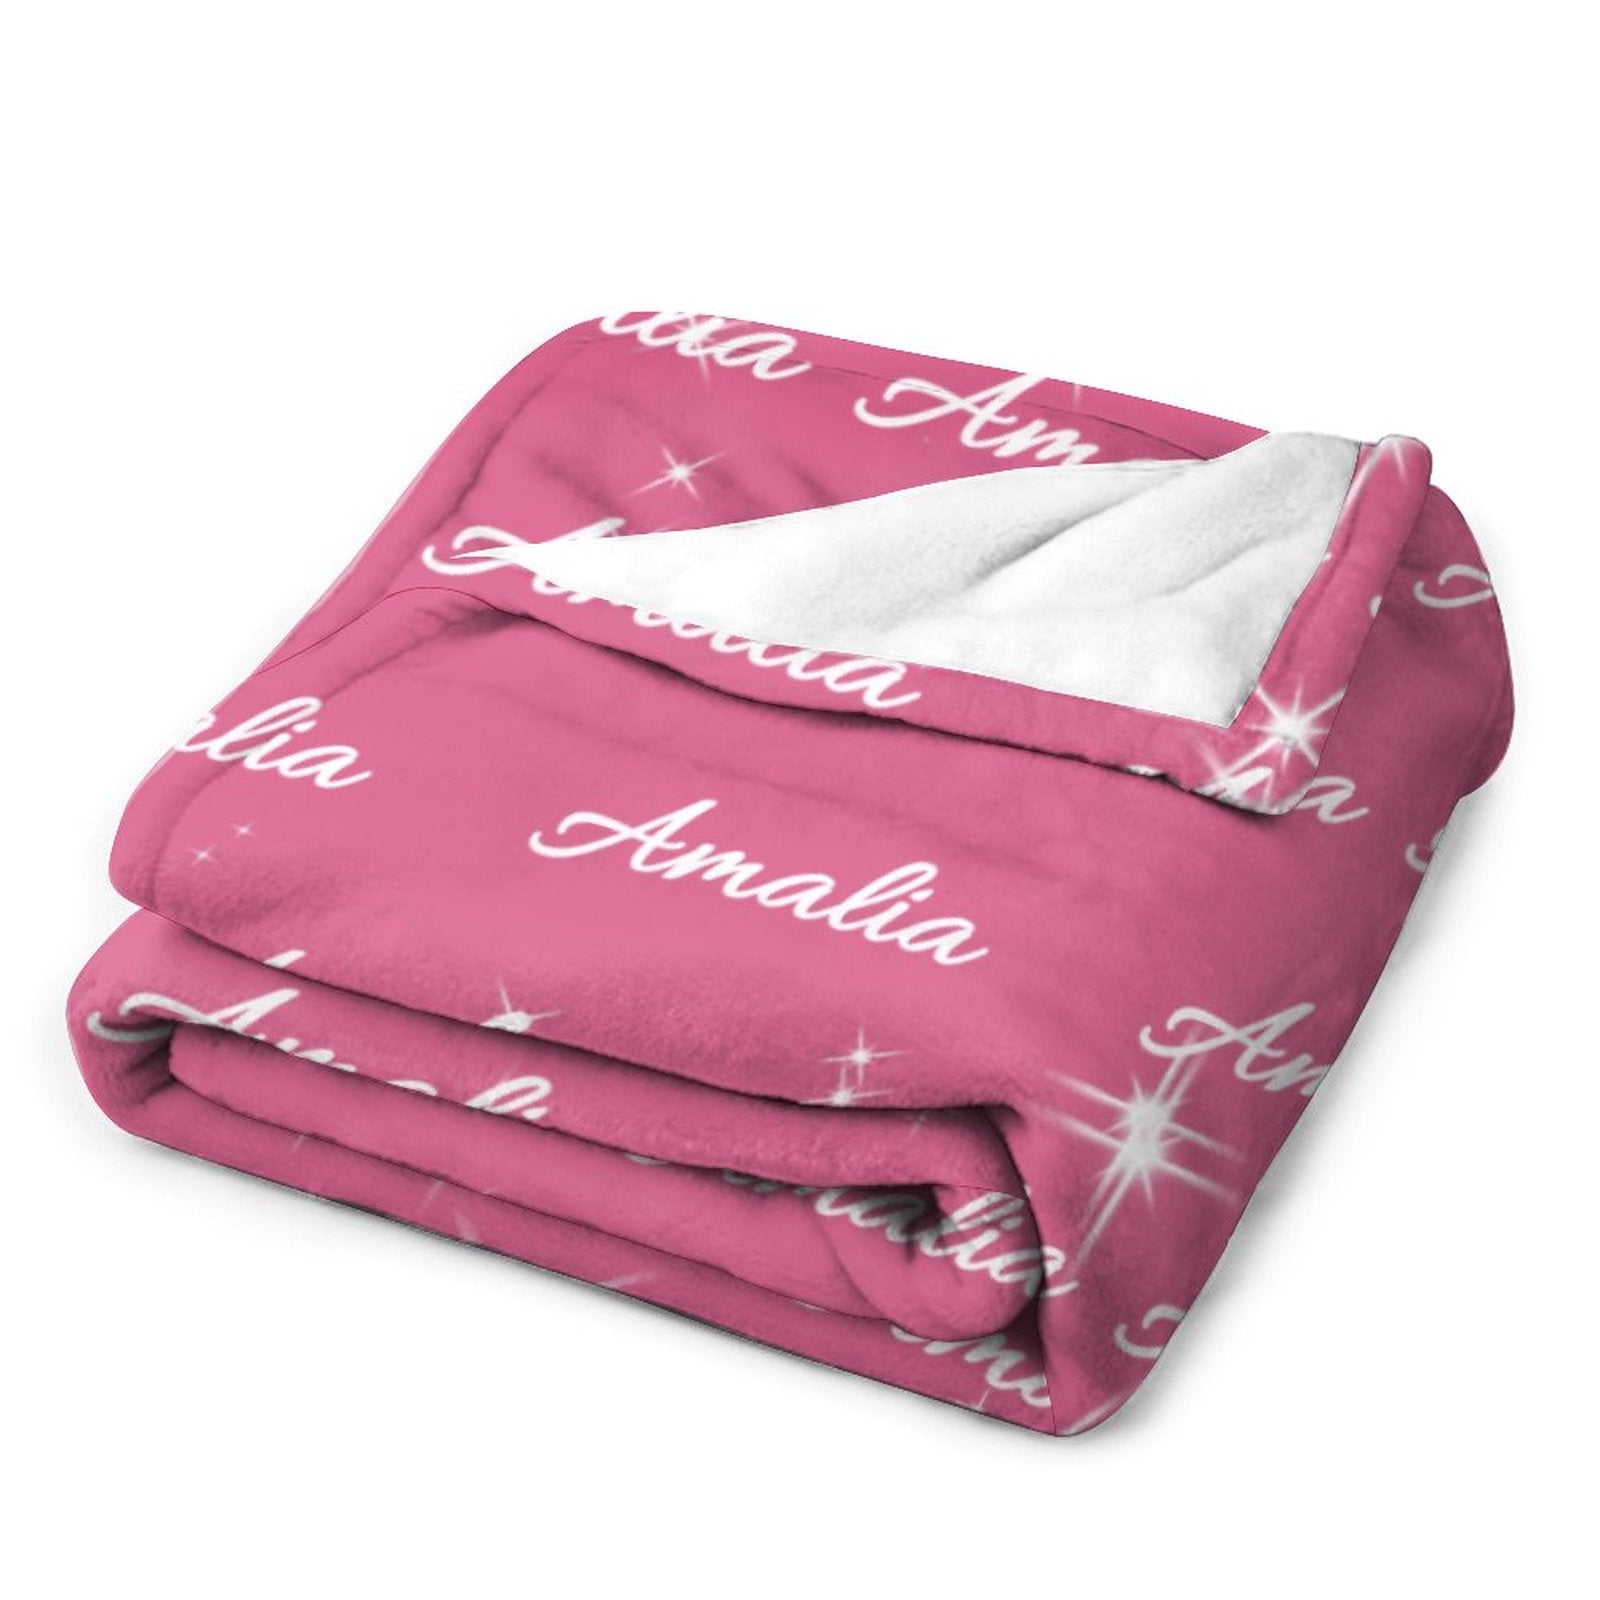 Personalized Custom Blanket,Name Blanket, Baby Blanket, Kids Blanket, Personalized Gifts, Custom Gifts